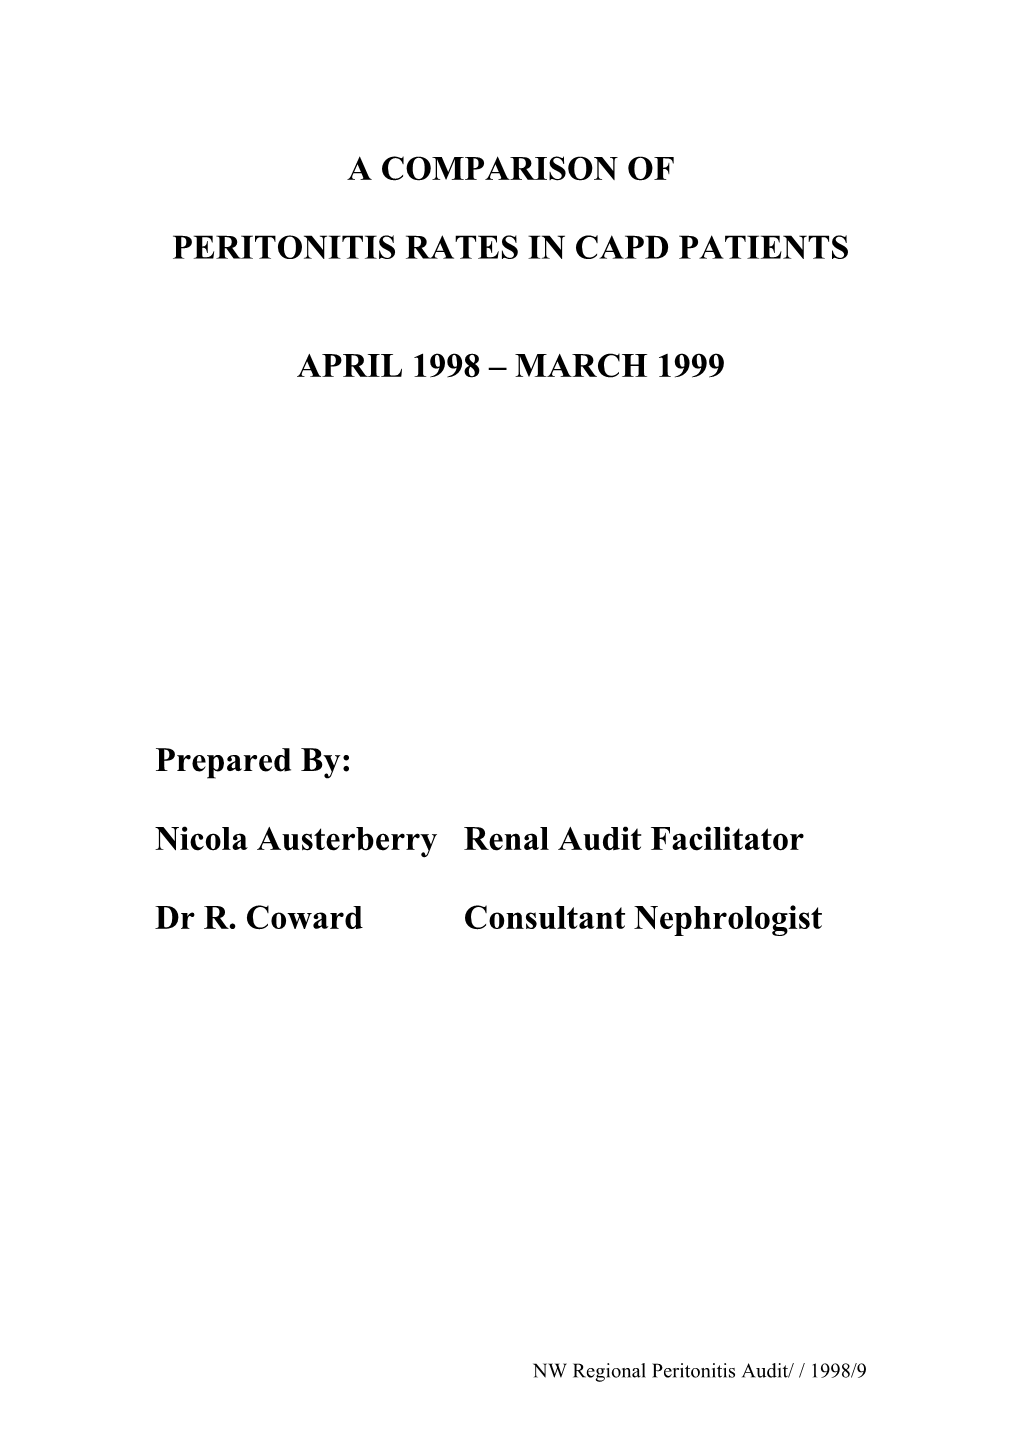 Peritonitis Rates in Capd Patients